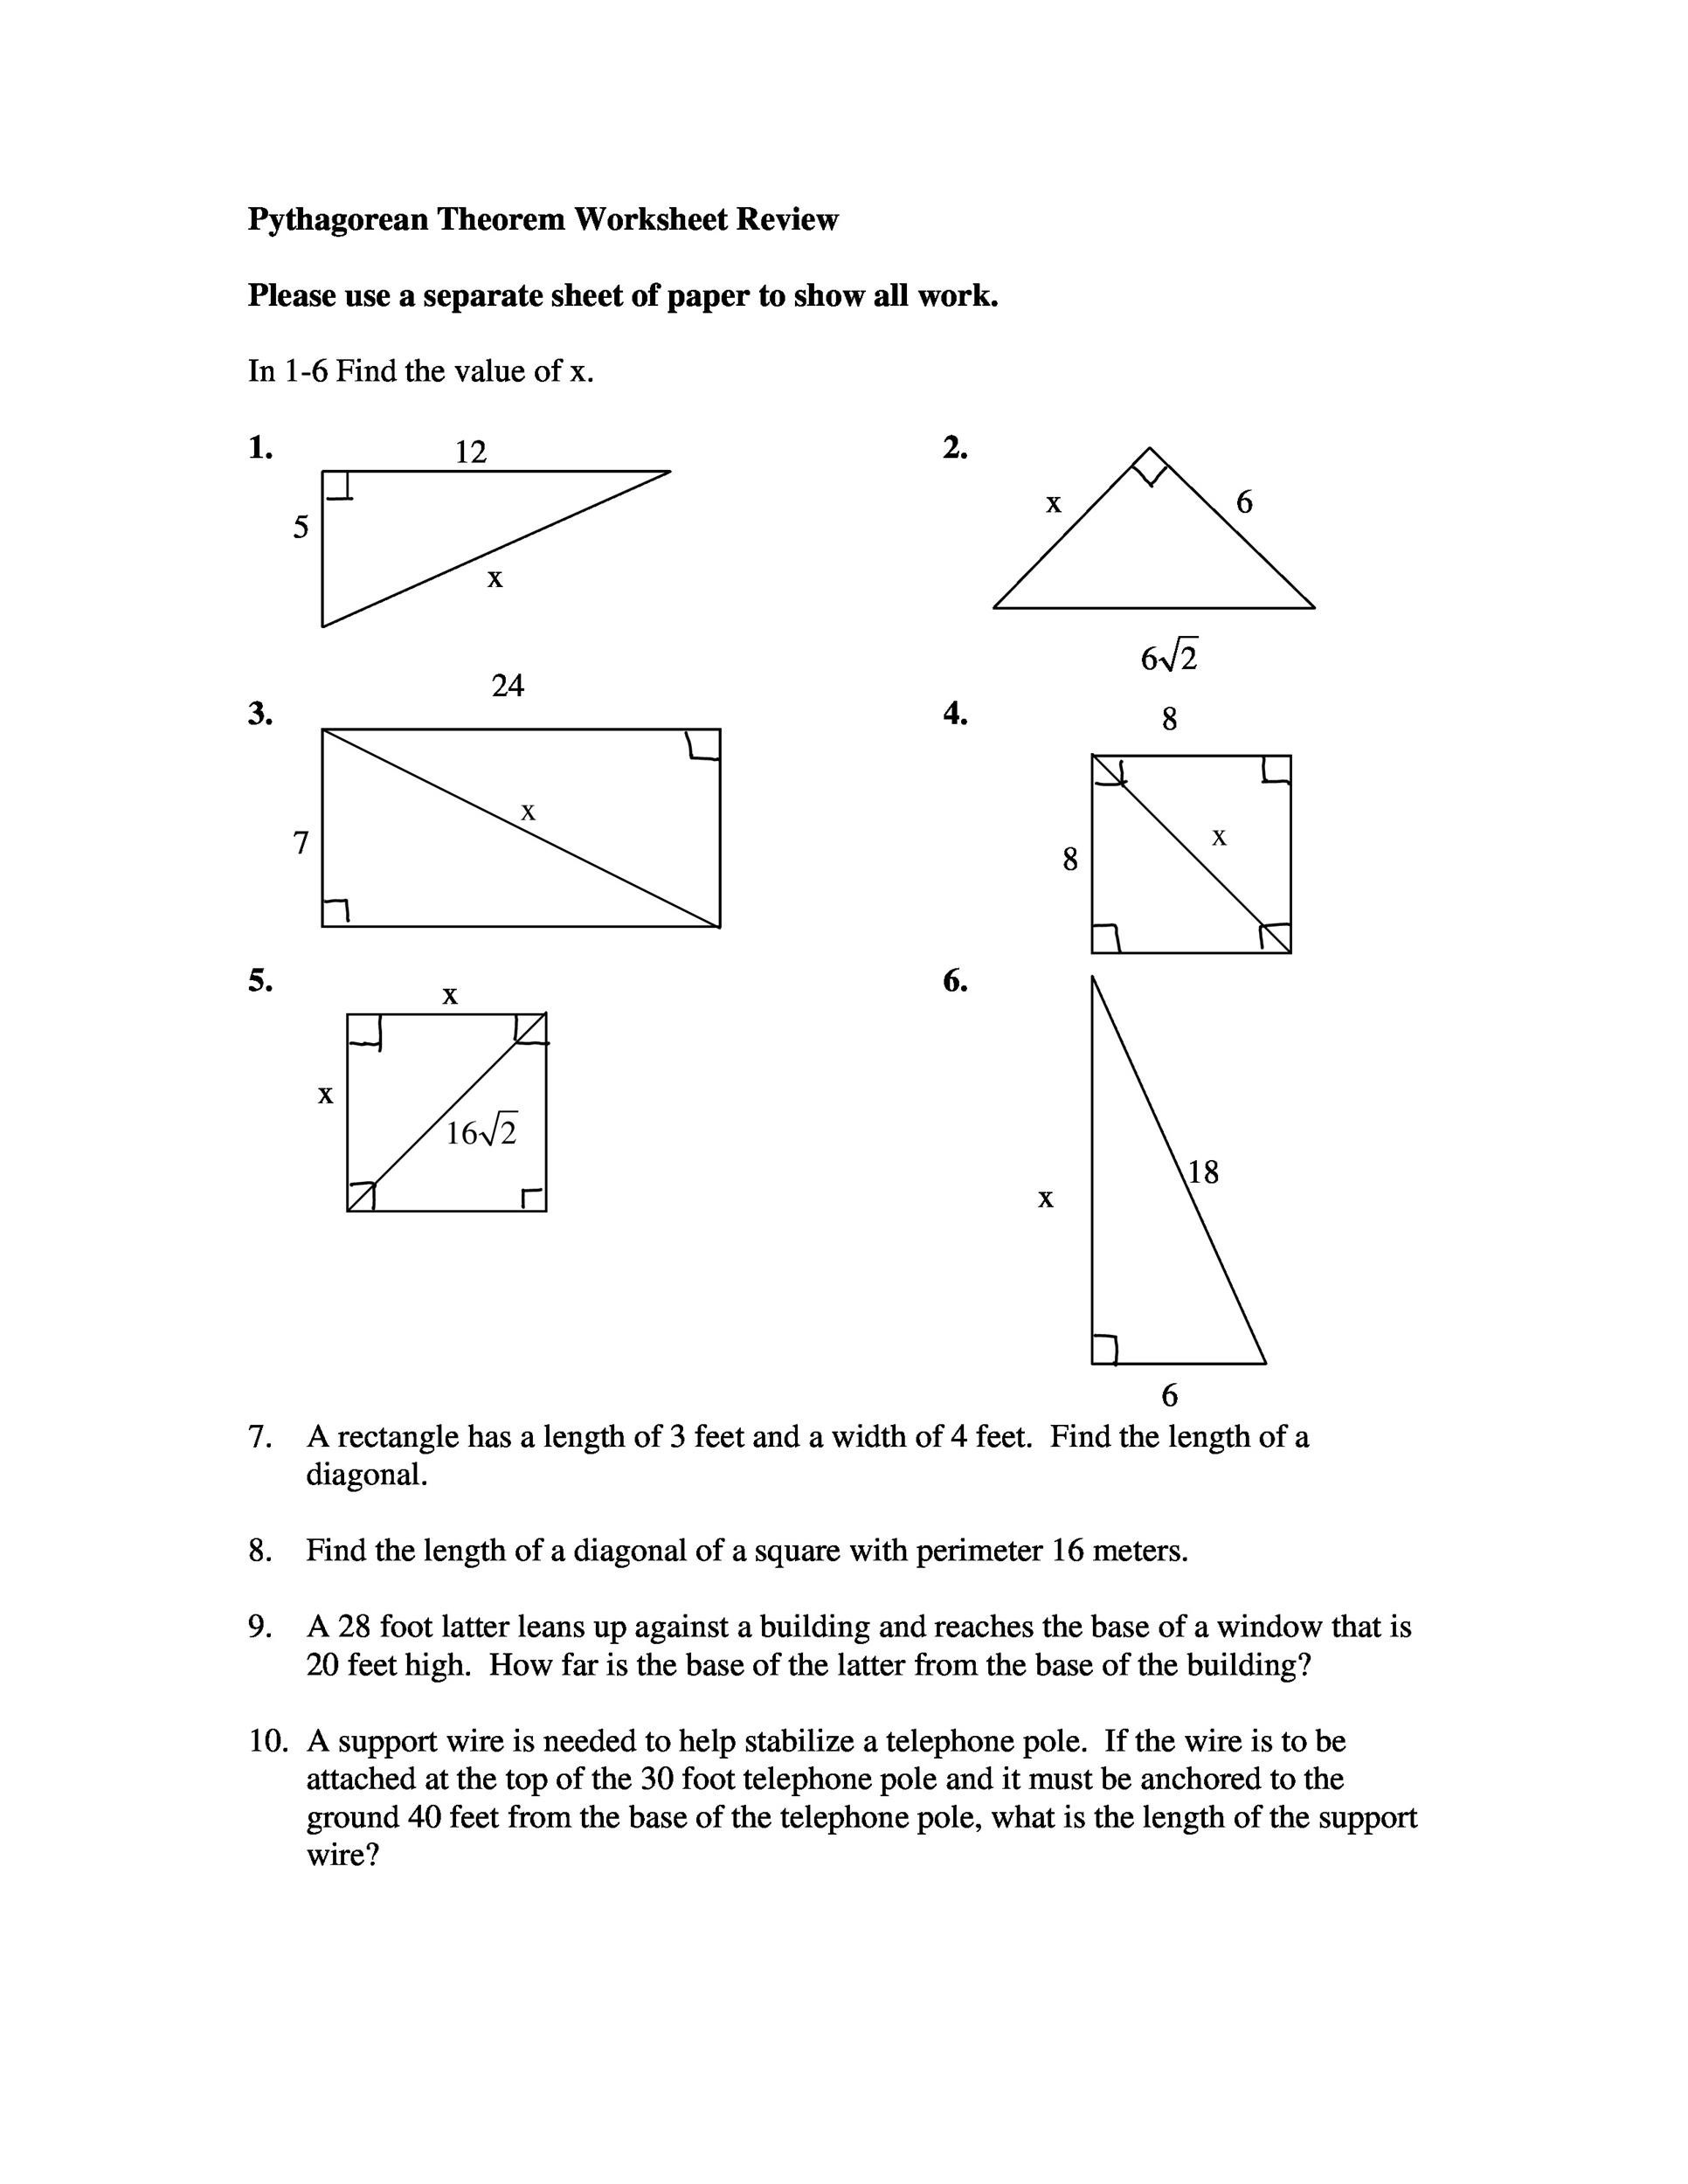 pythagorean-theorem-word-problems-worksheet